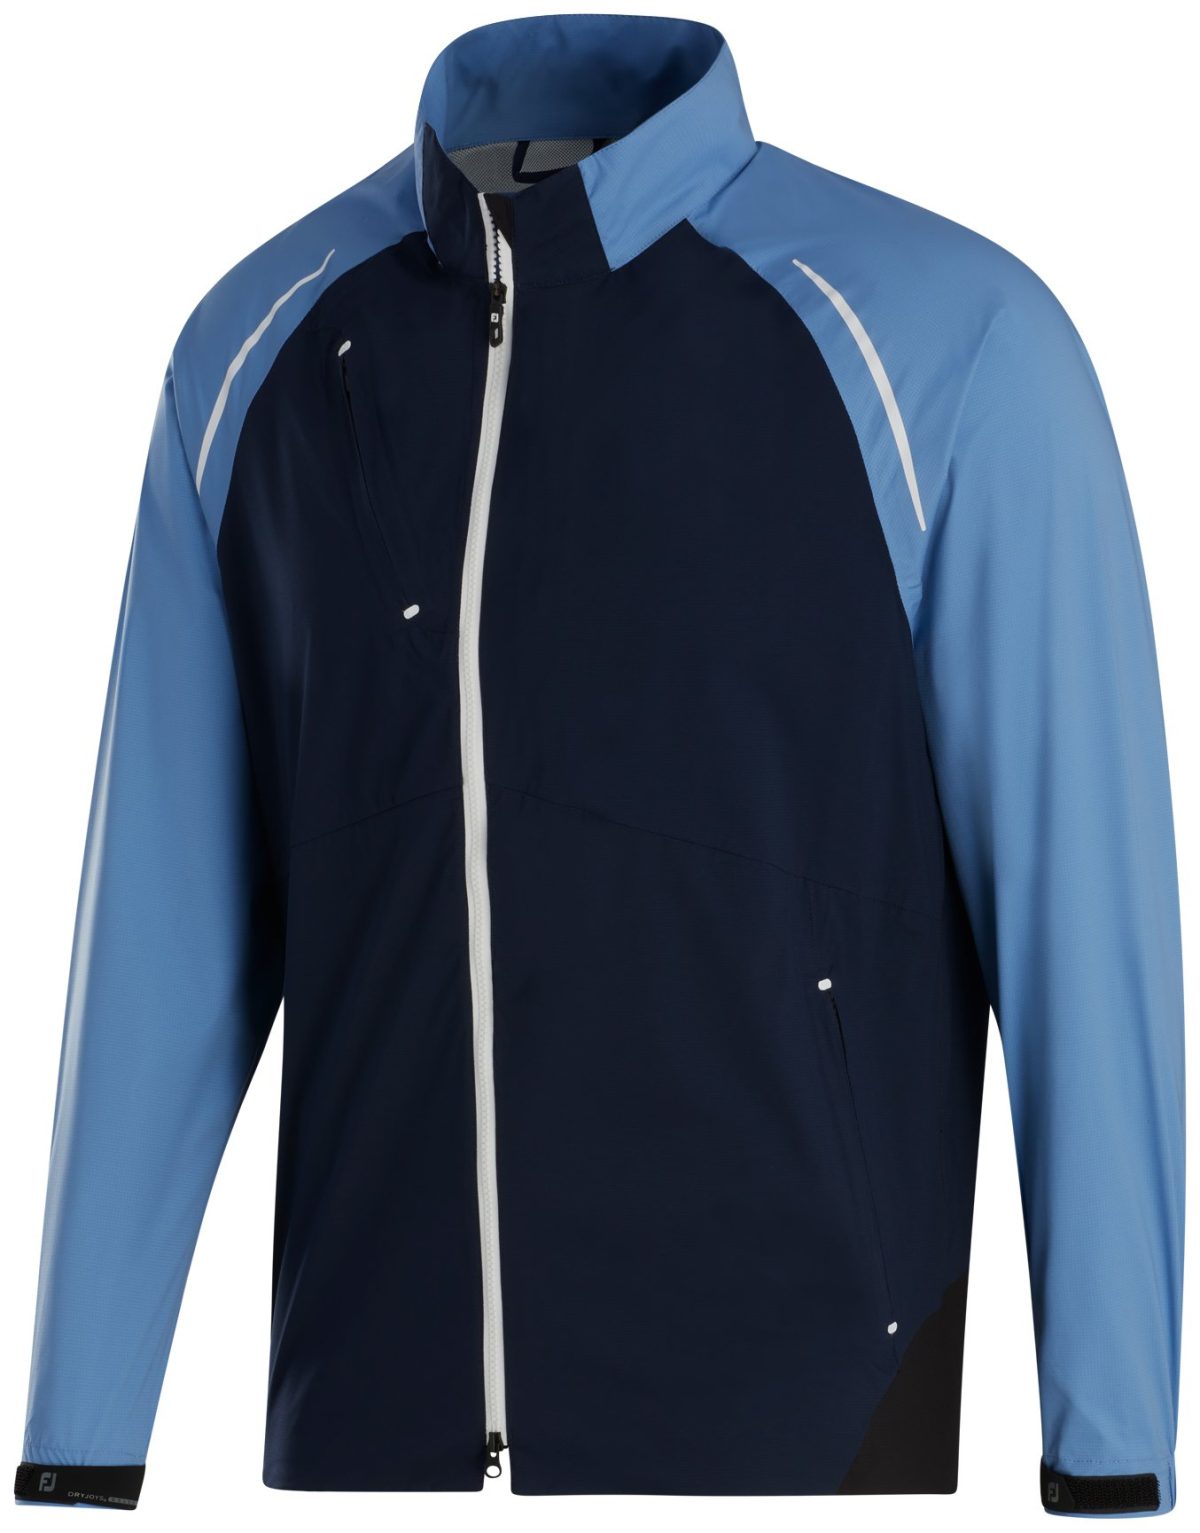 FootJoy Men's Dryjoys Select Golf Rain Jacket in Navy/Indigo, Size S